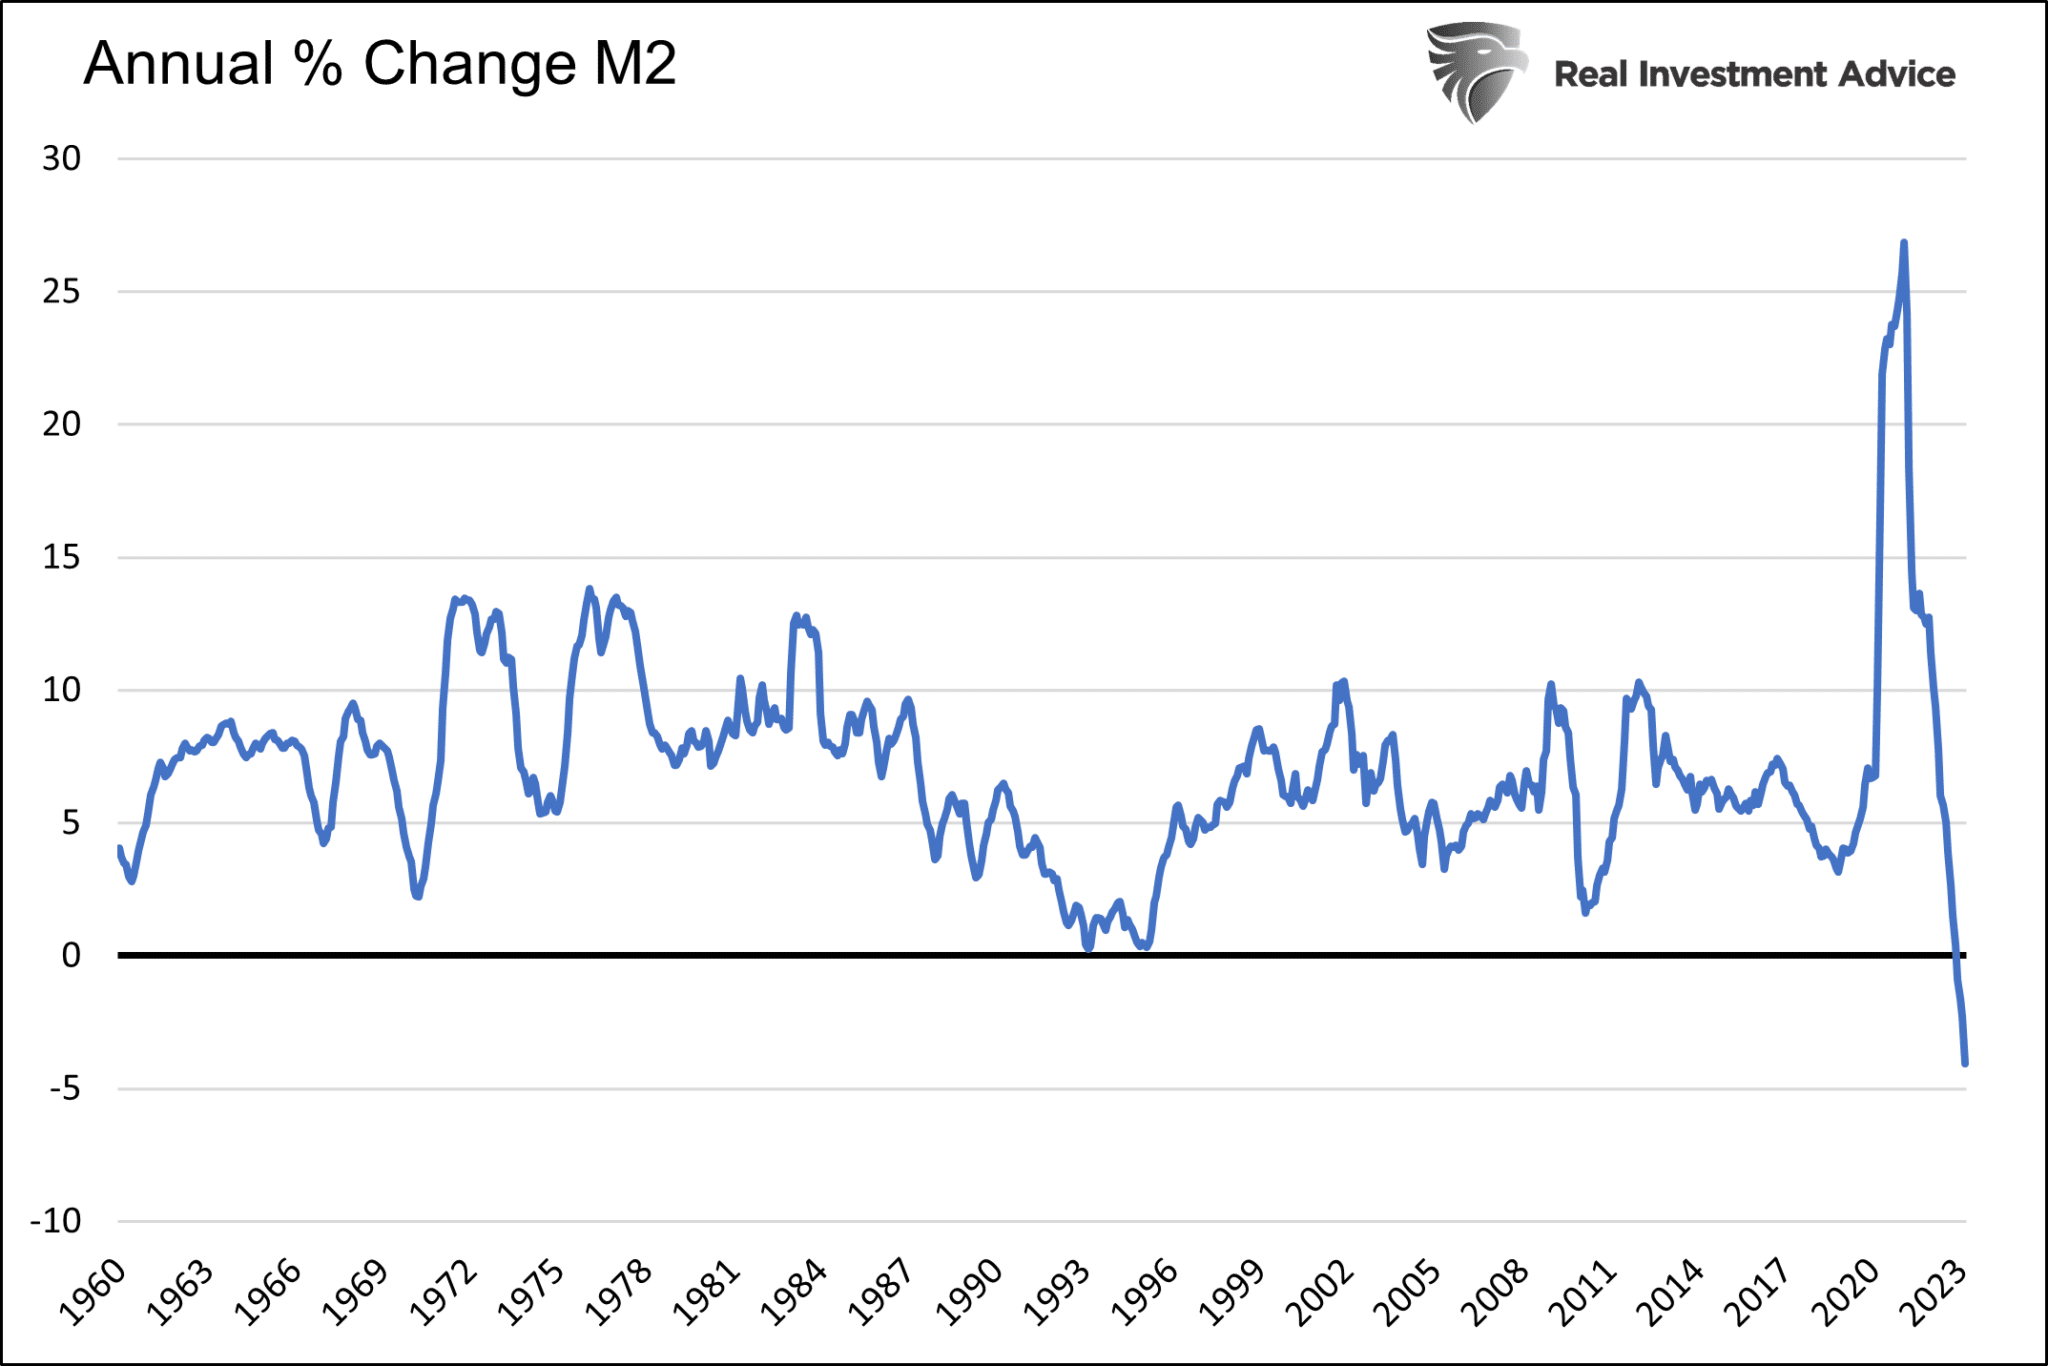 M2 Percentage Change